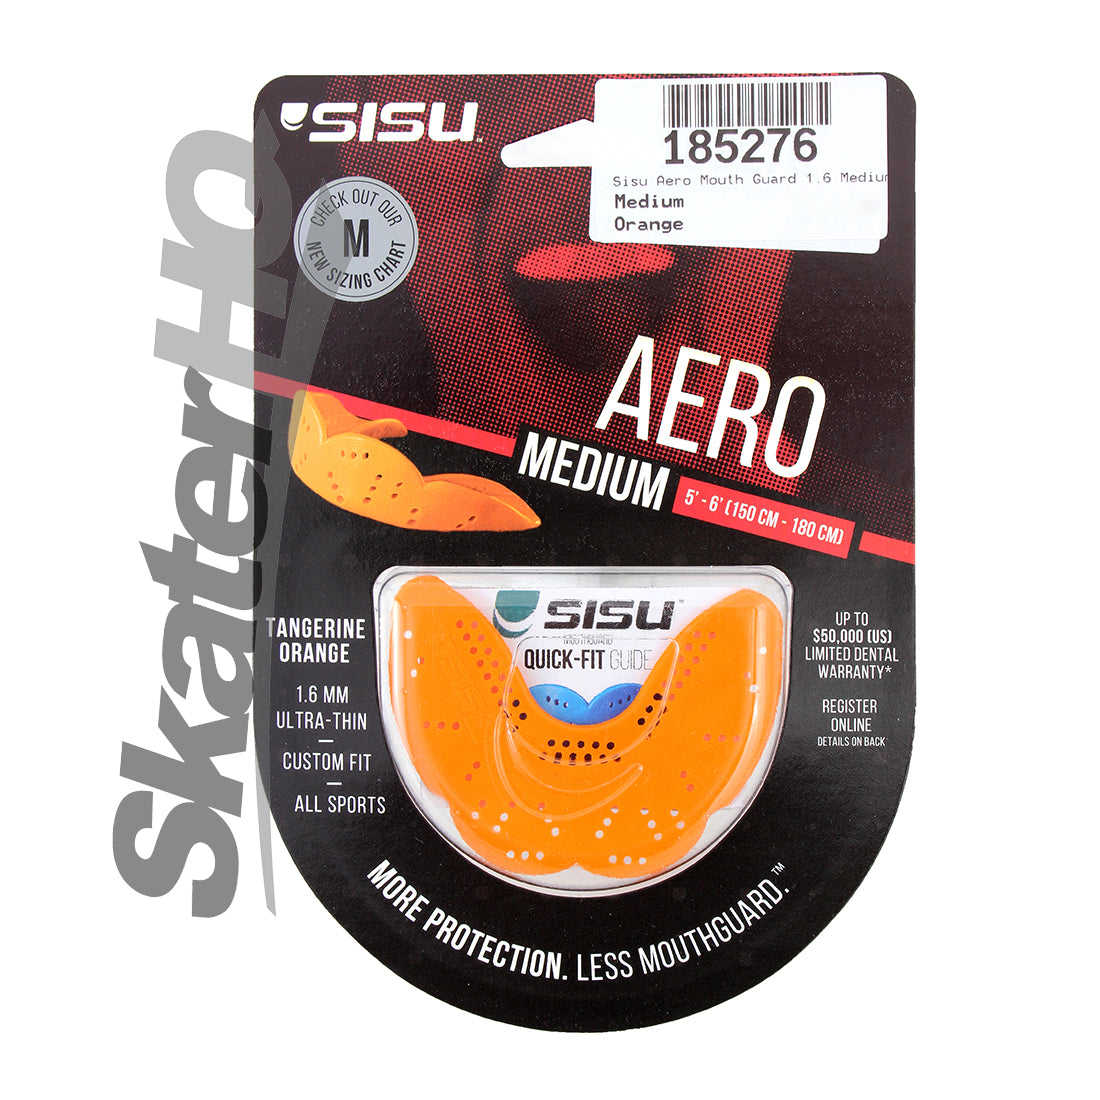 SISU AERO Mouthguard 1.6 Medium - Tangerine Orange Protective Mouthguards